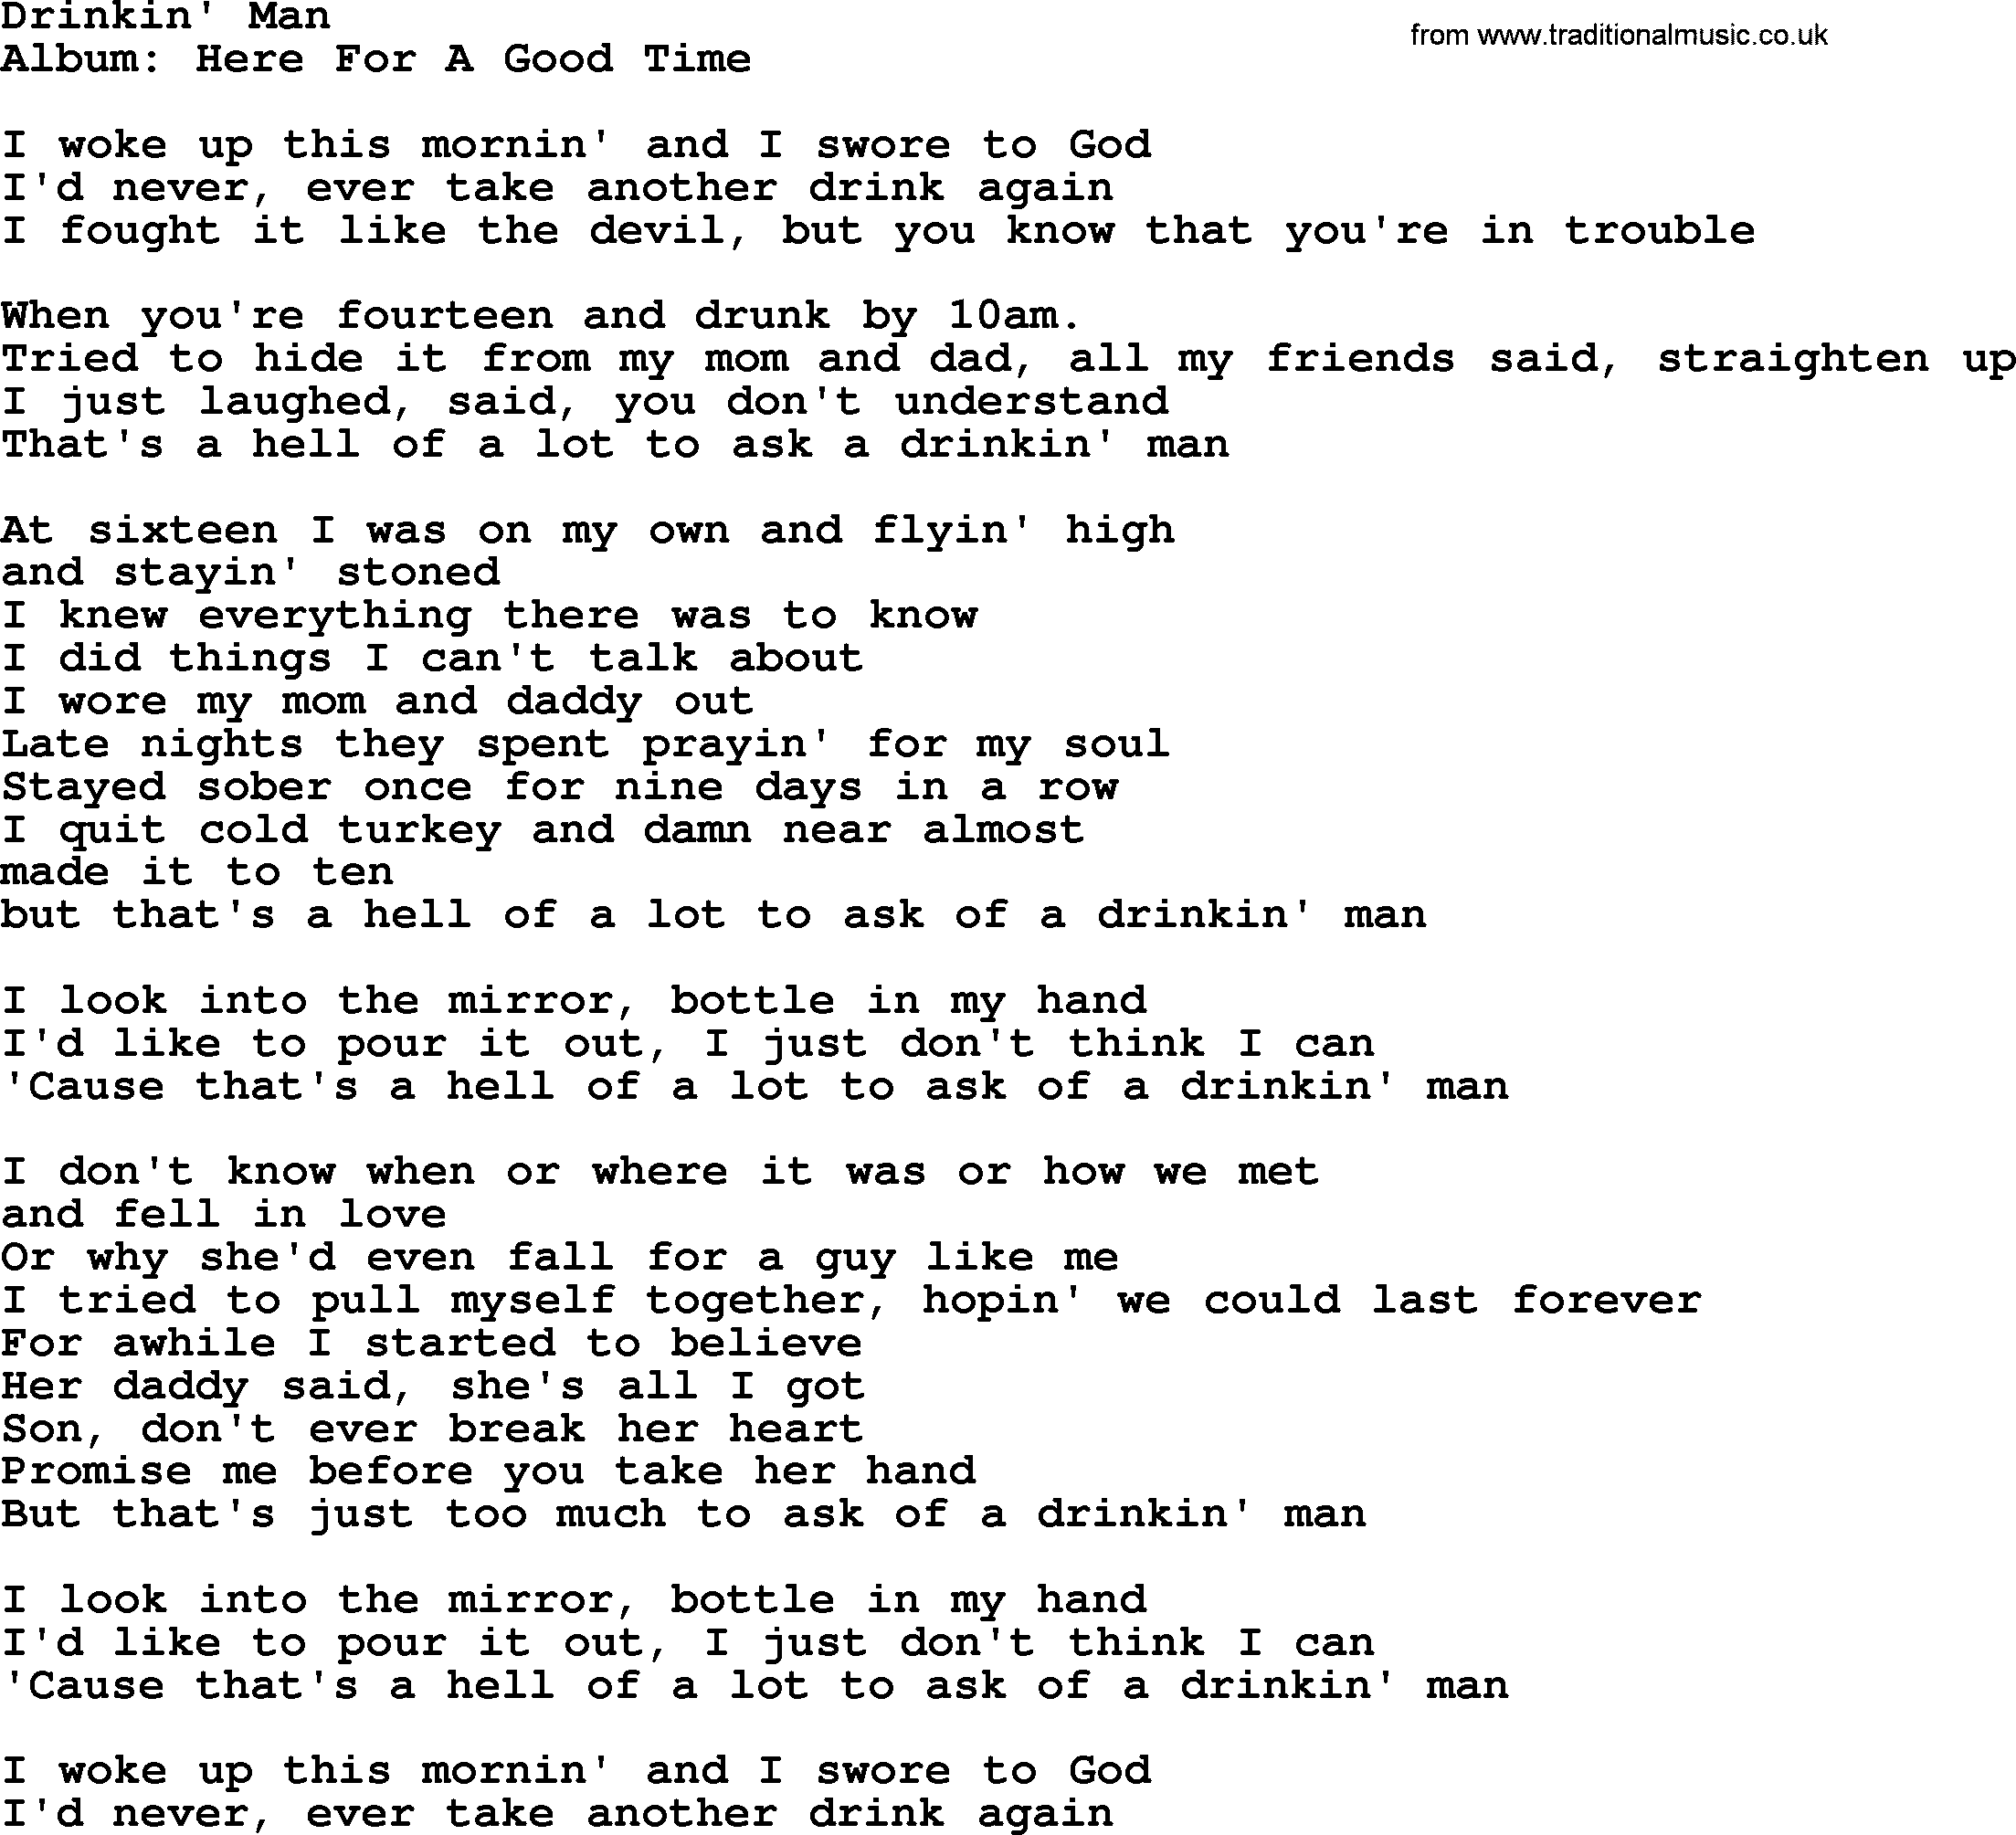 George Strait song: Drinkin' Man, lyrics